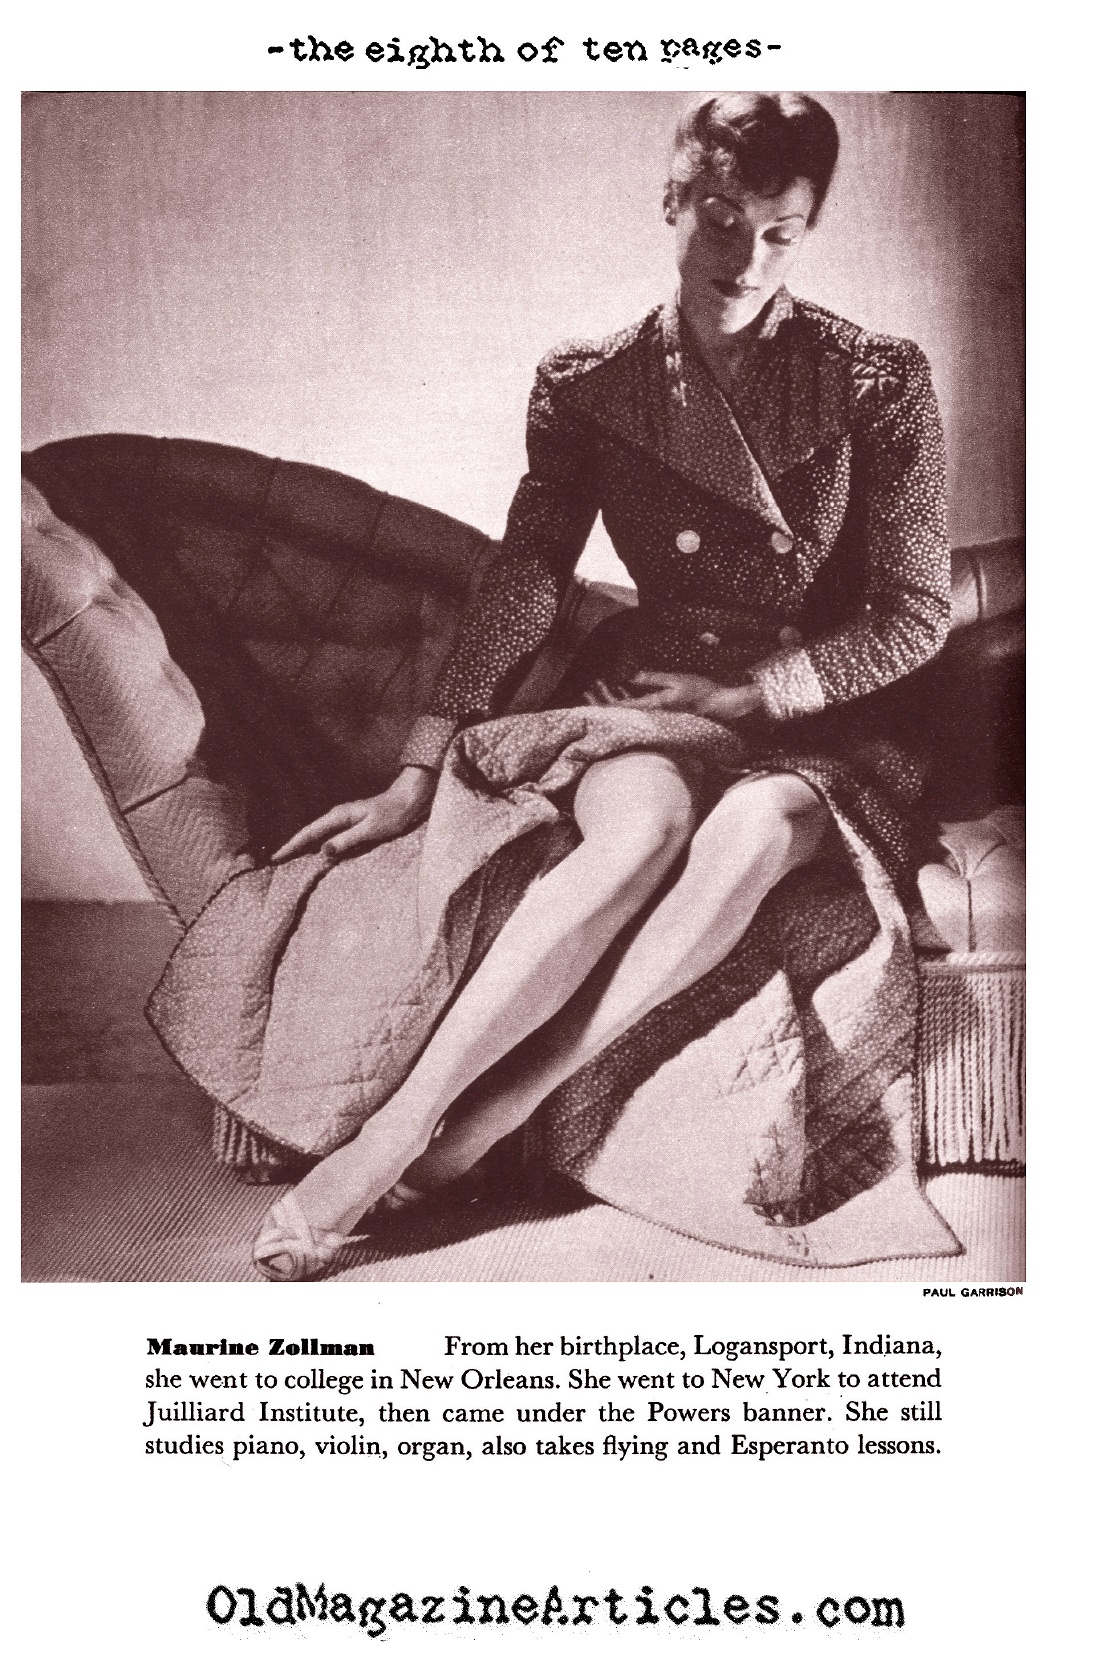 The John Powers Modeling Agency (Coronet Magazine, 1941)